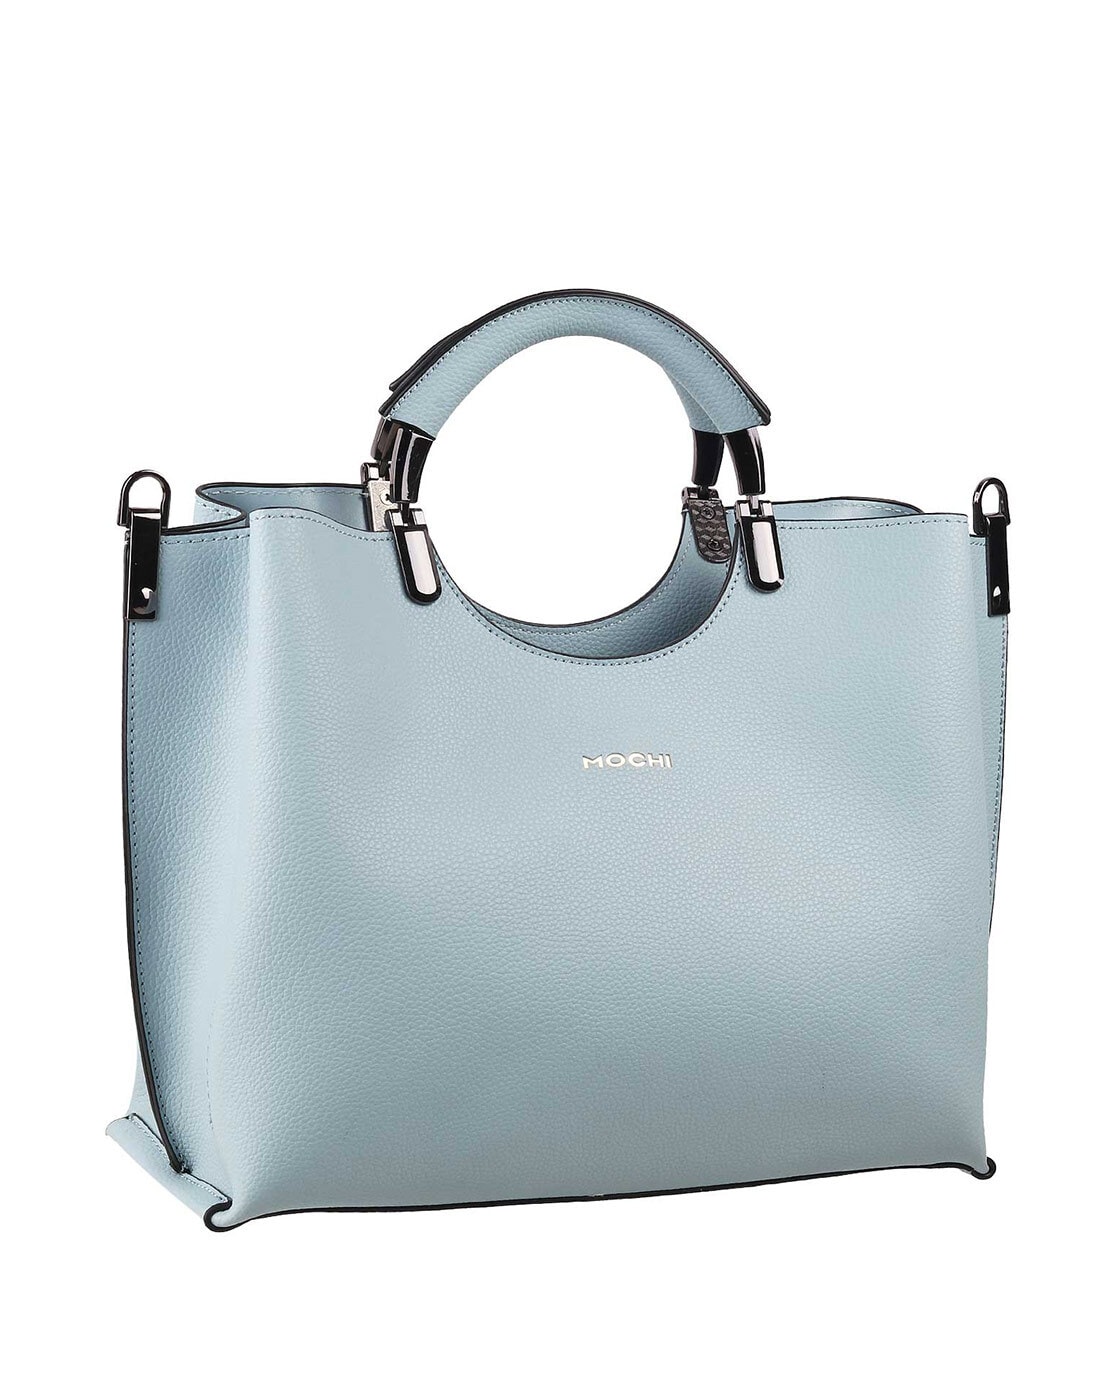 Buy Black Handbags for Women by Mochi Online | Ajio.com